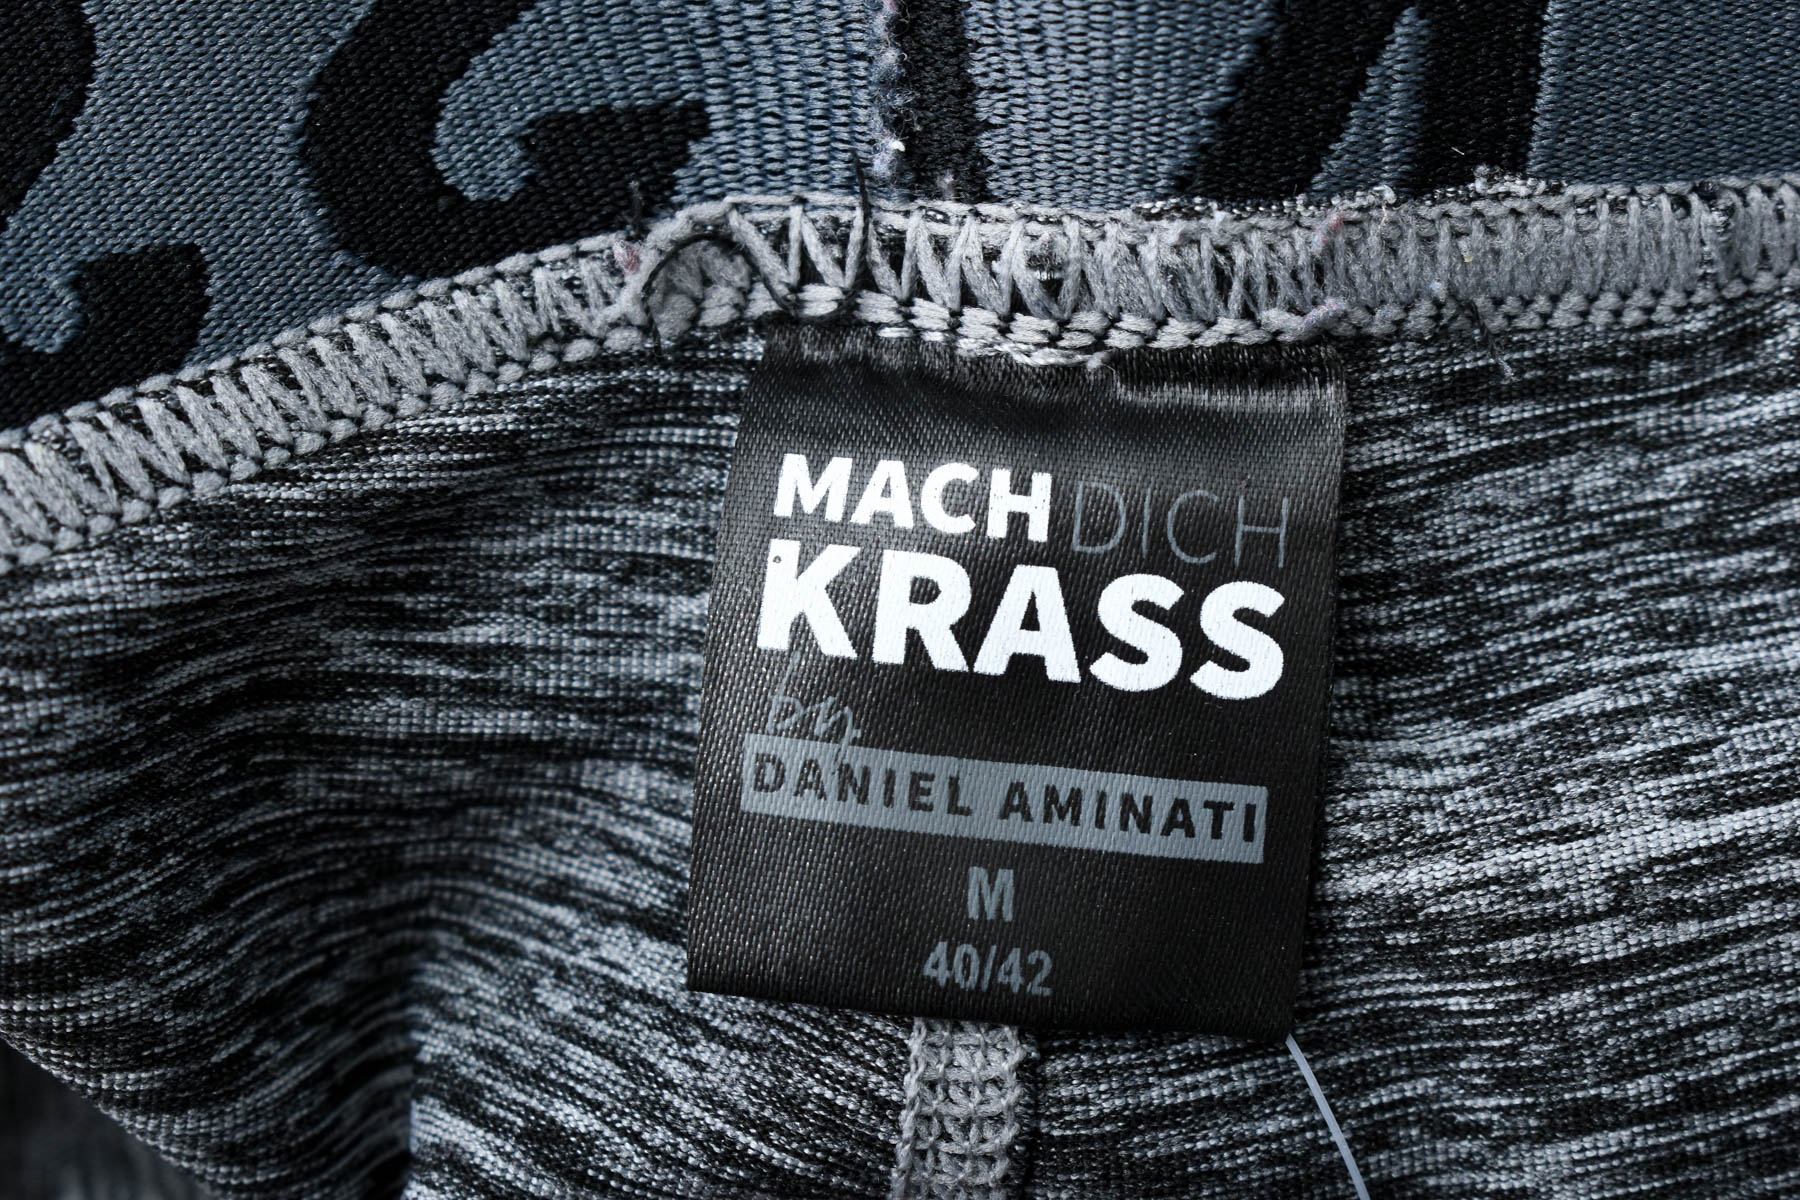 Leggings - MACH DICH KRASS by DANIEL AMINATI - 2